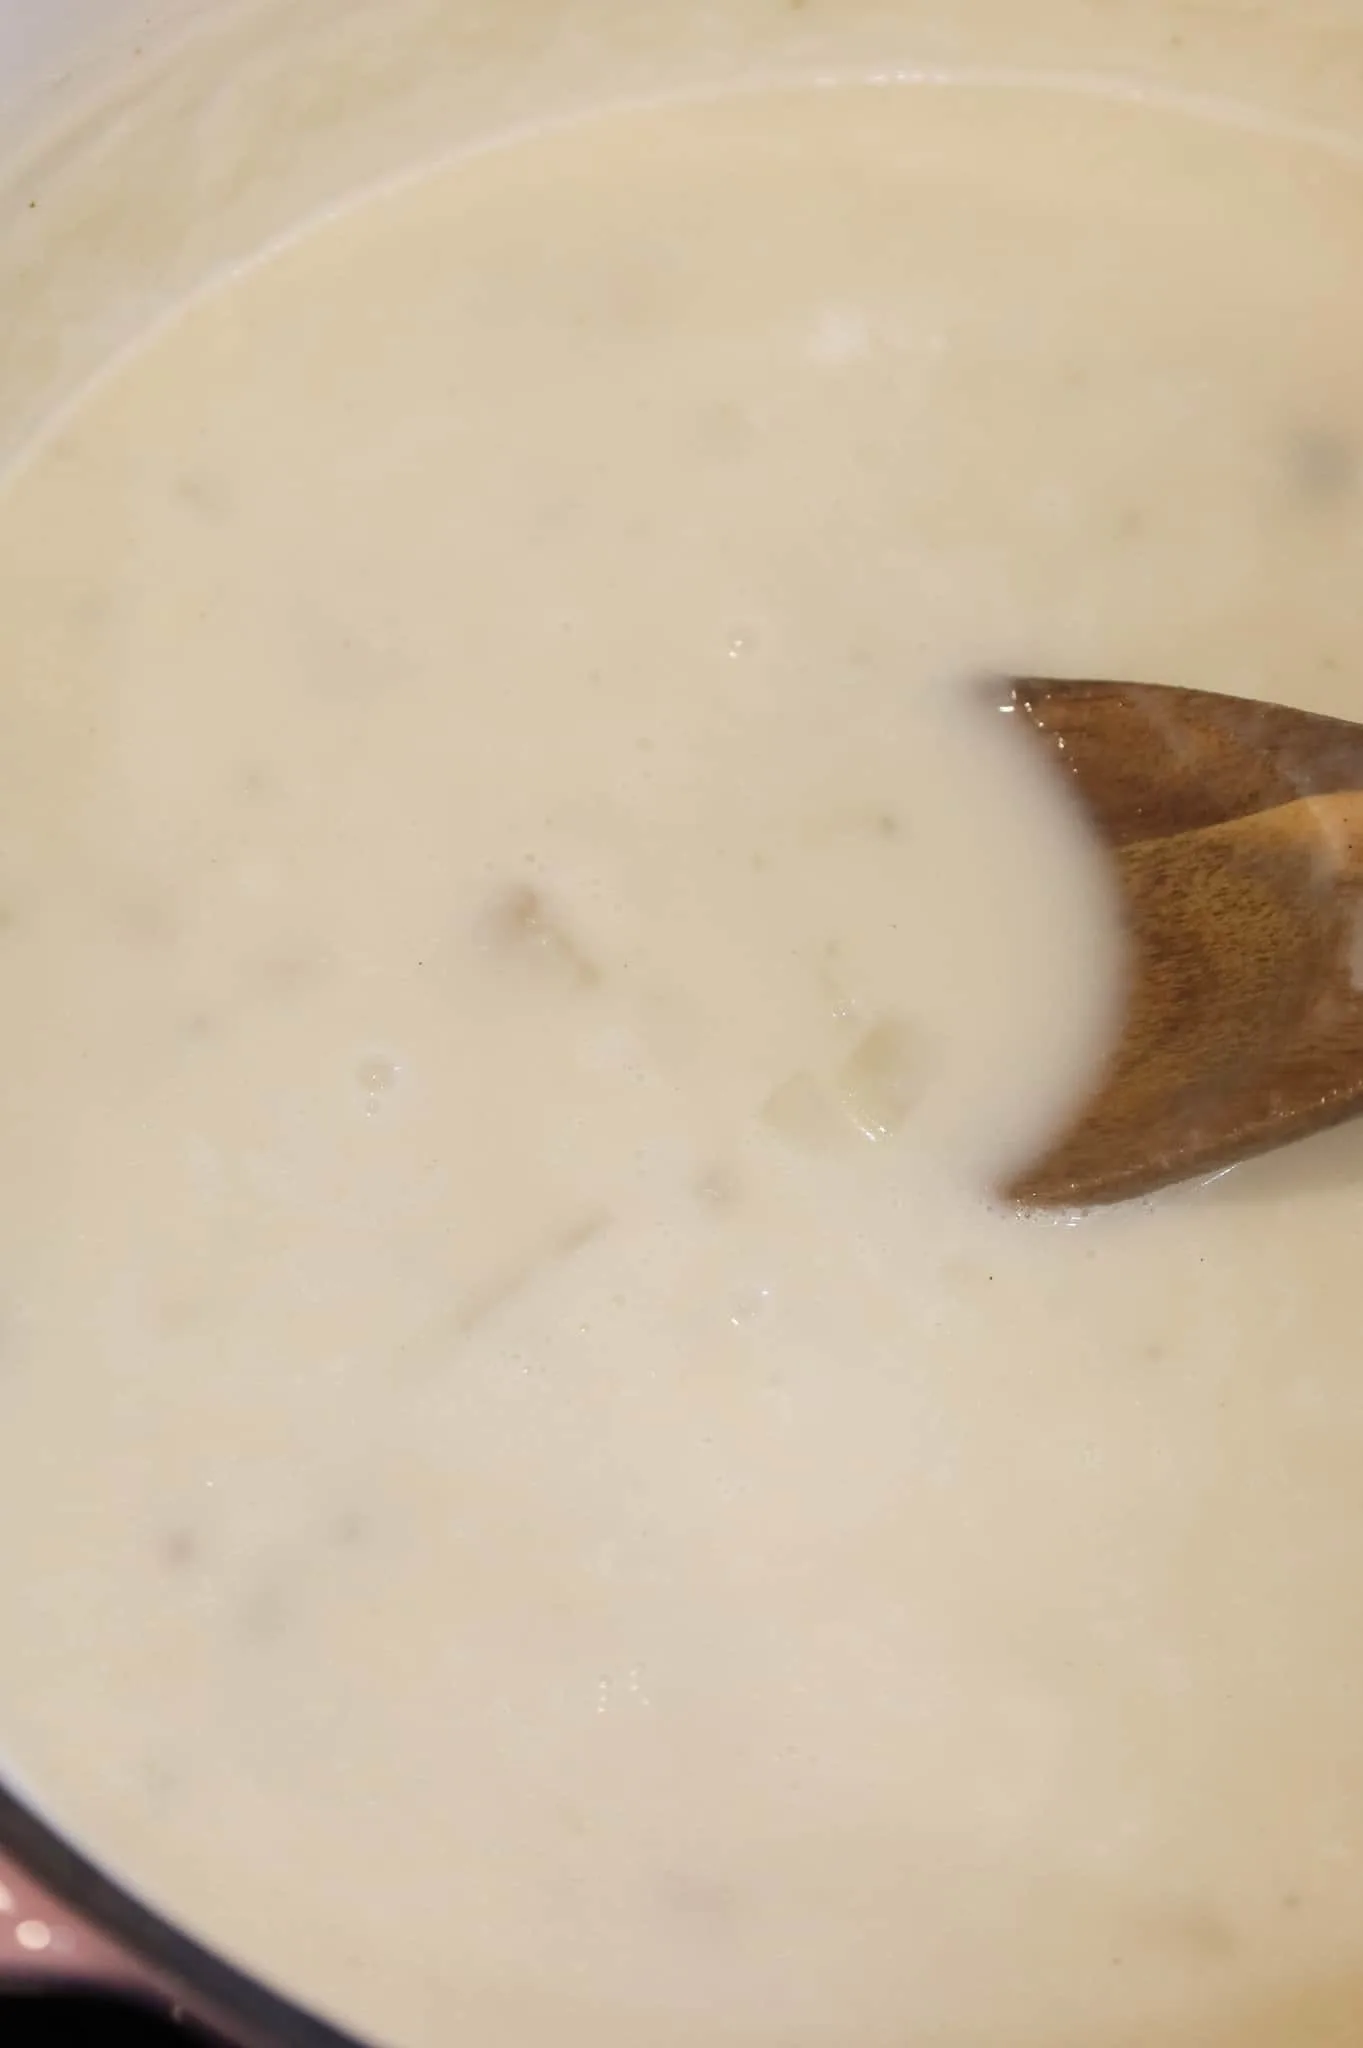 simmering potato soup in a pot